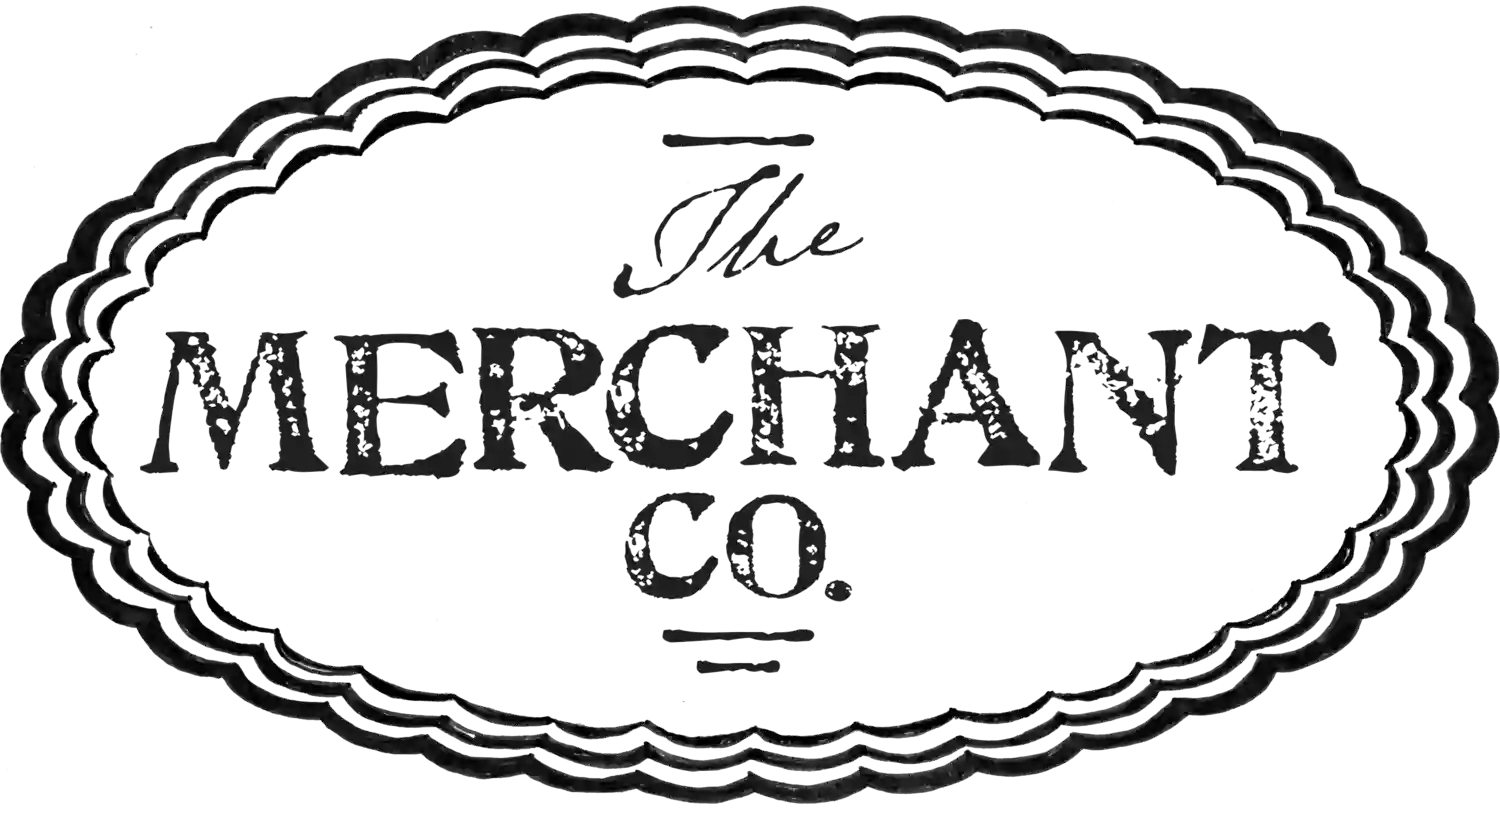 The Merchant Company